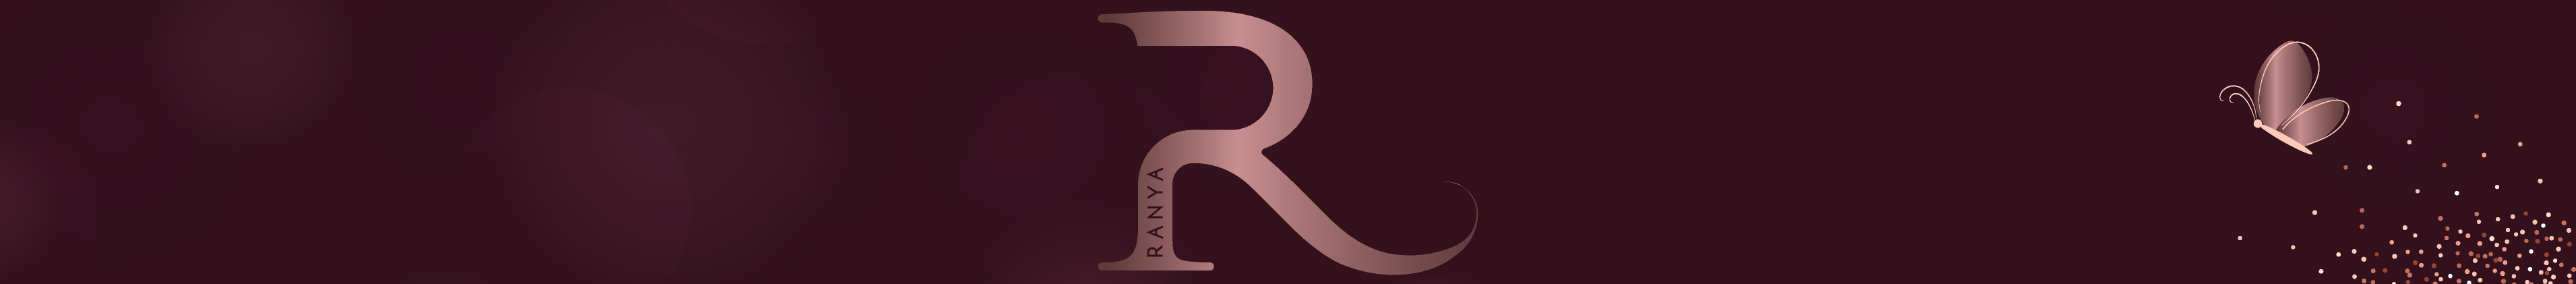 Ranya Refaat 的個人檔案橫幅